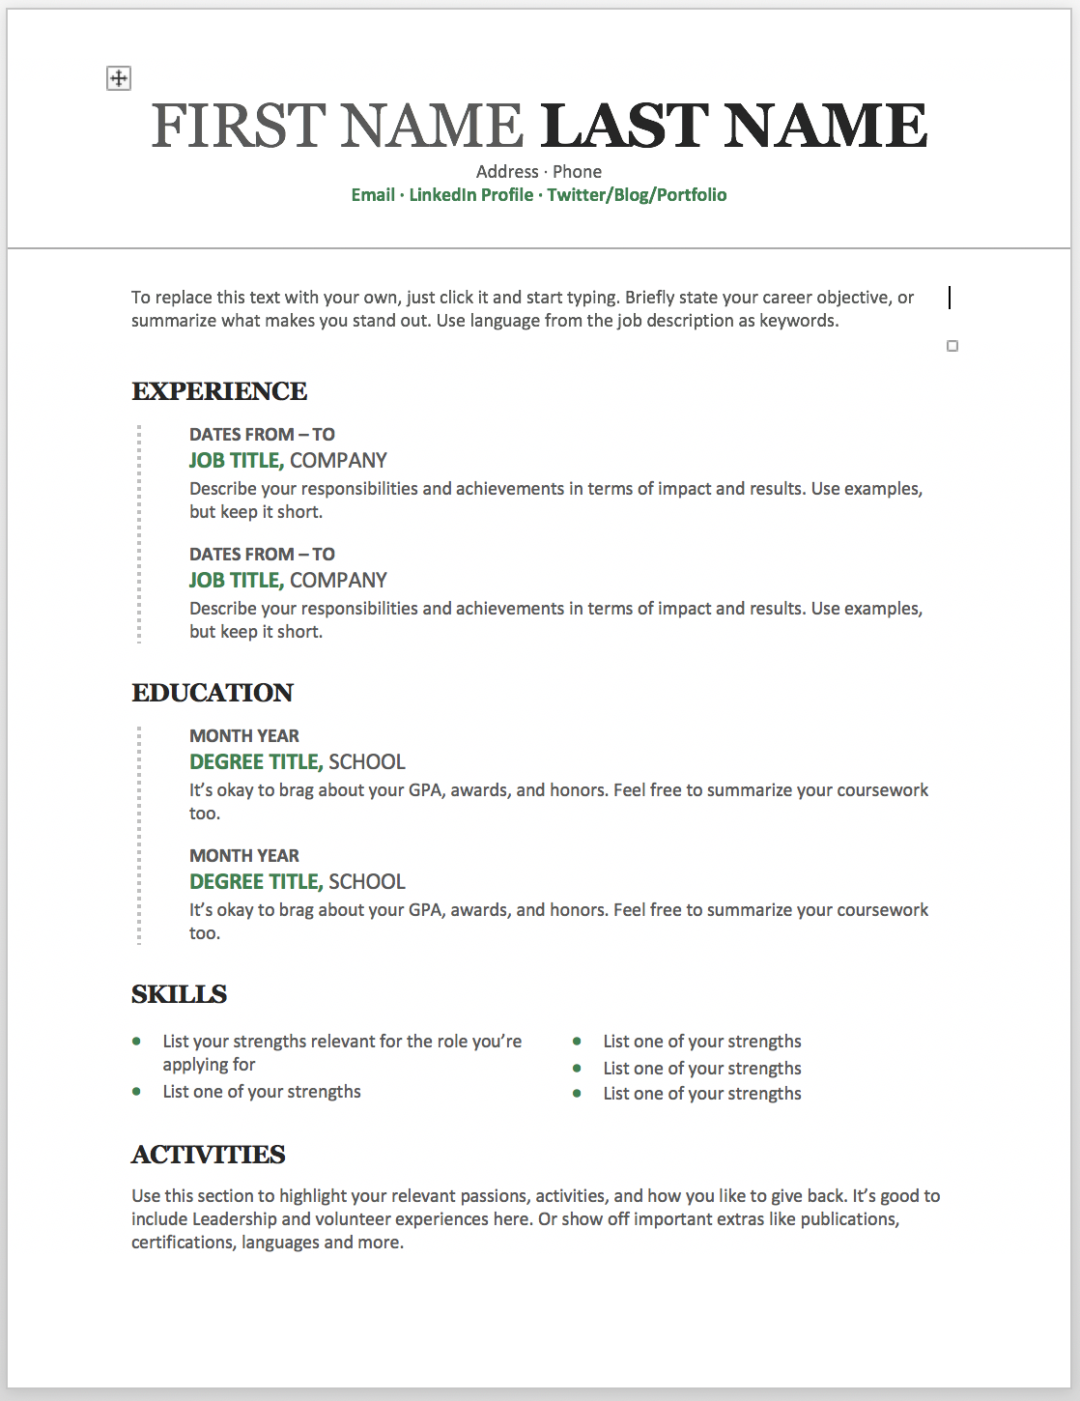 free-eye-catching-resume-templates-growth-skills